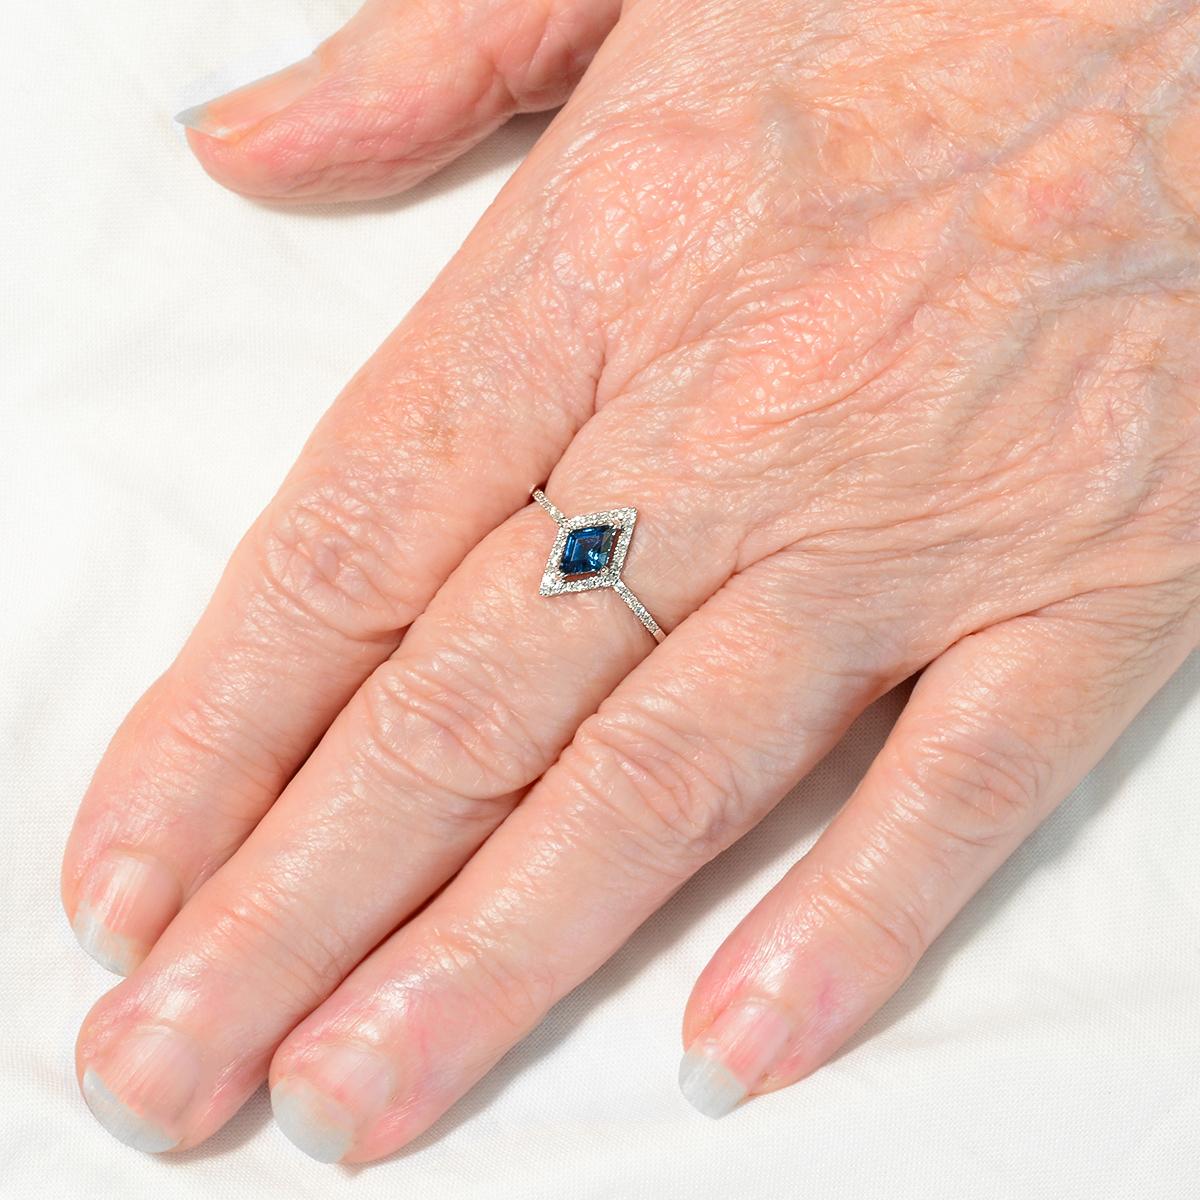 Contemporary Blue Topaz Diamond Ring, Finest London Blue Topaz + 34 Diamonds Solid White Gold